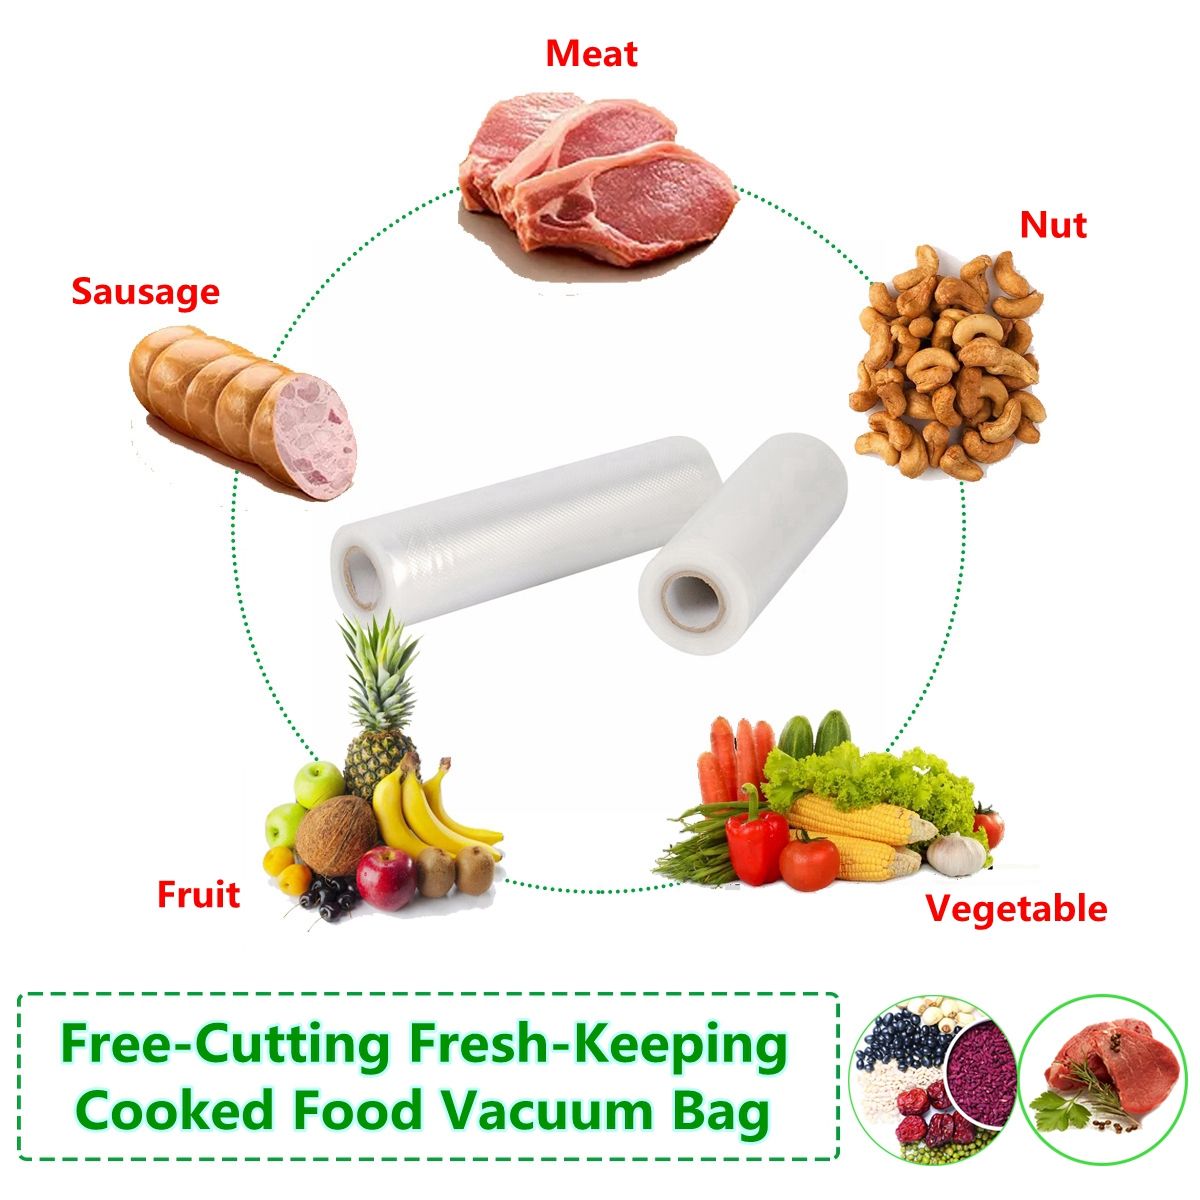 Vacuum-Bag-Food-Sealer-Rolls-Saver-Bag-Seal-Storage-Fresh-Keeping-Cooked-Food-1698417